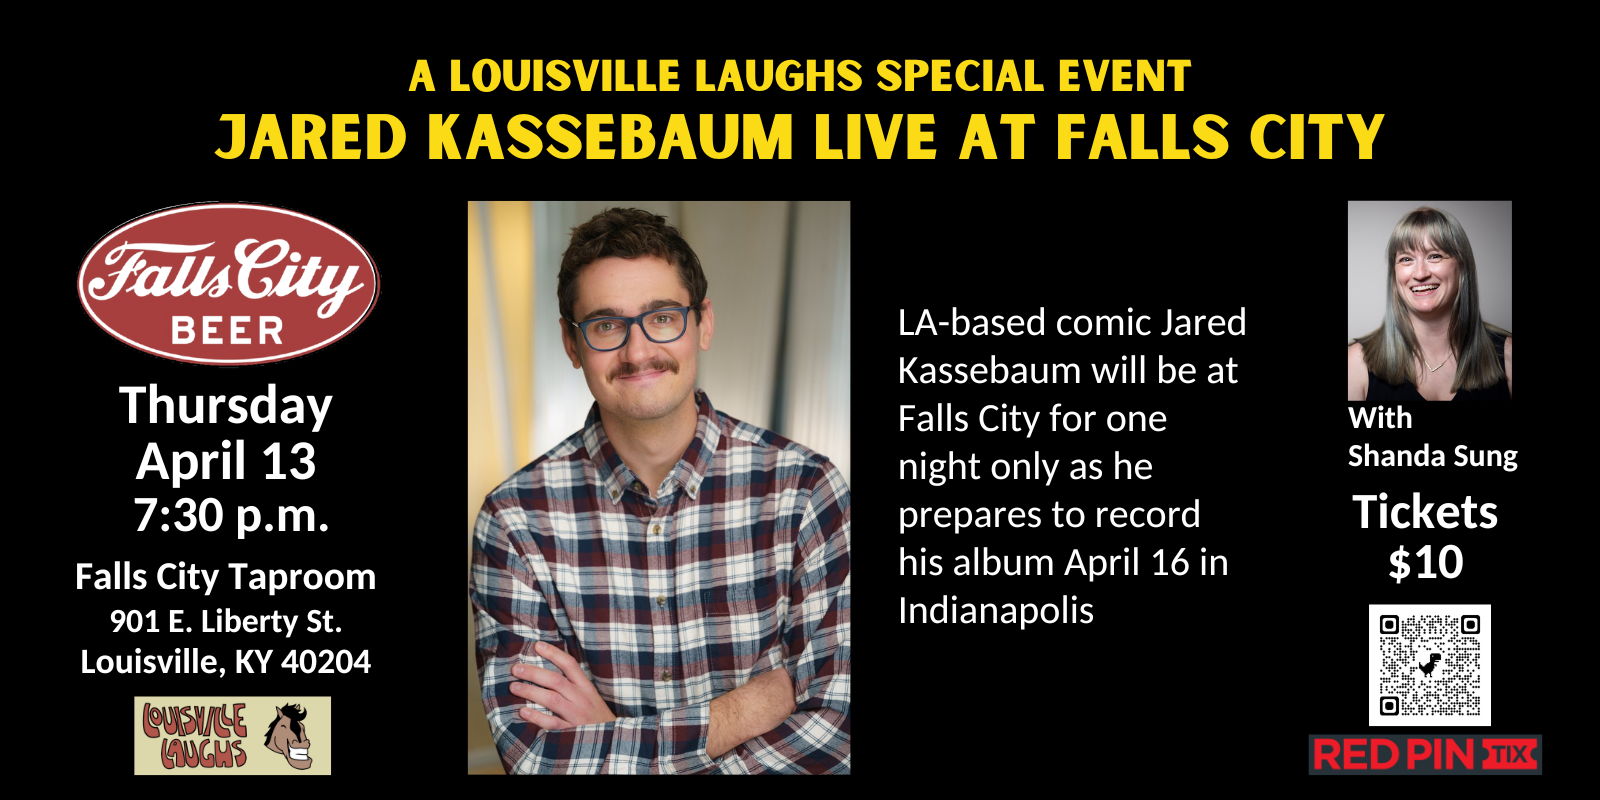 Jared Kassebaum live at Falls City promotional image